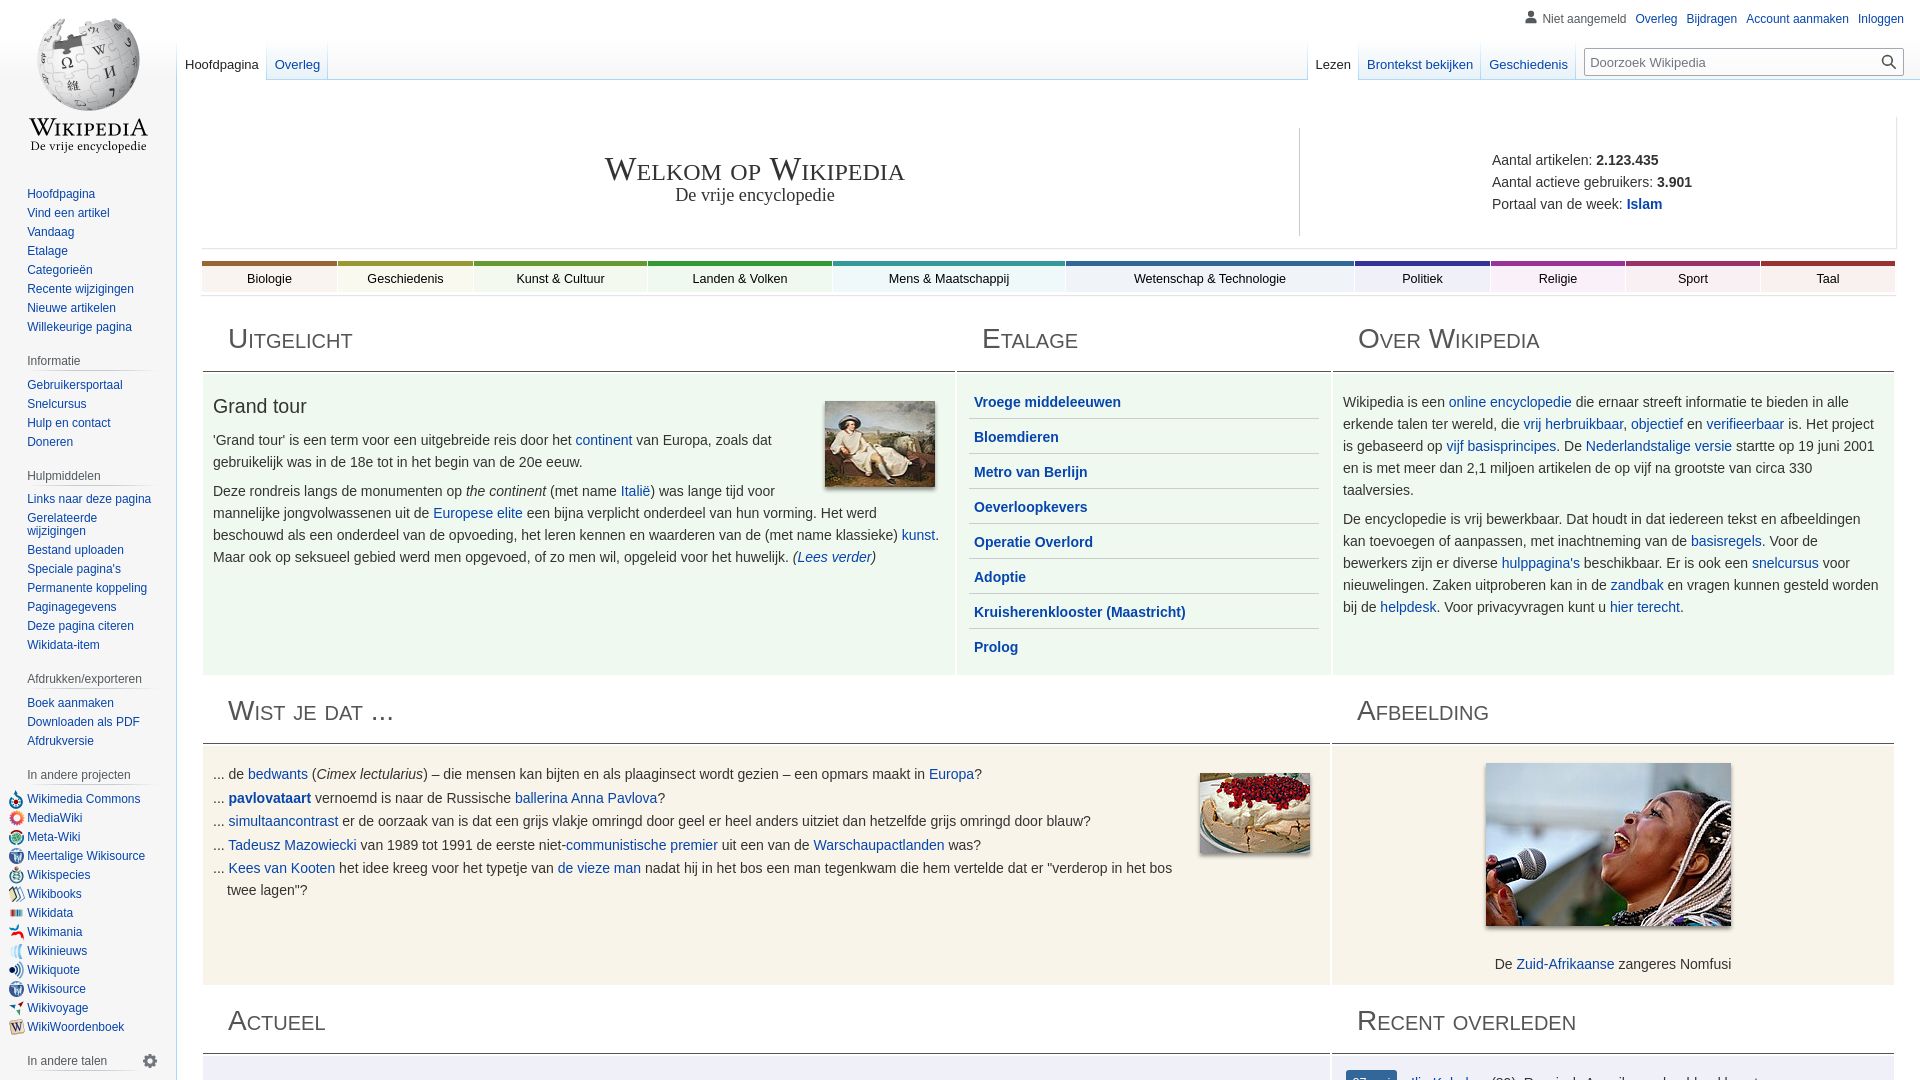 Website status nl.wikipedia.org is   ONLINE